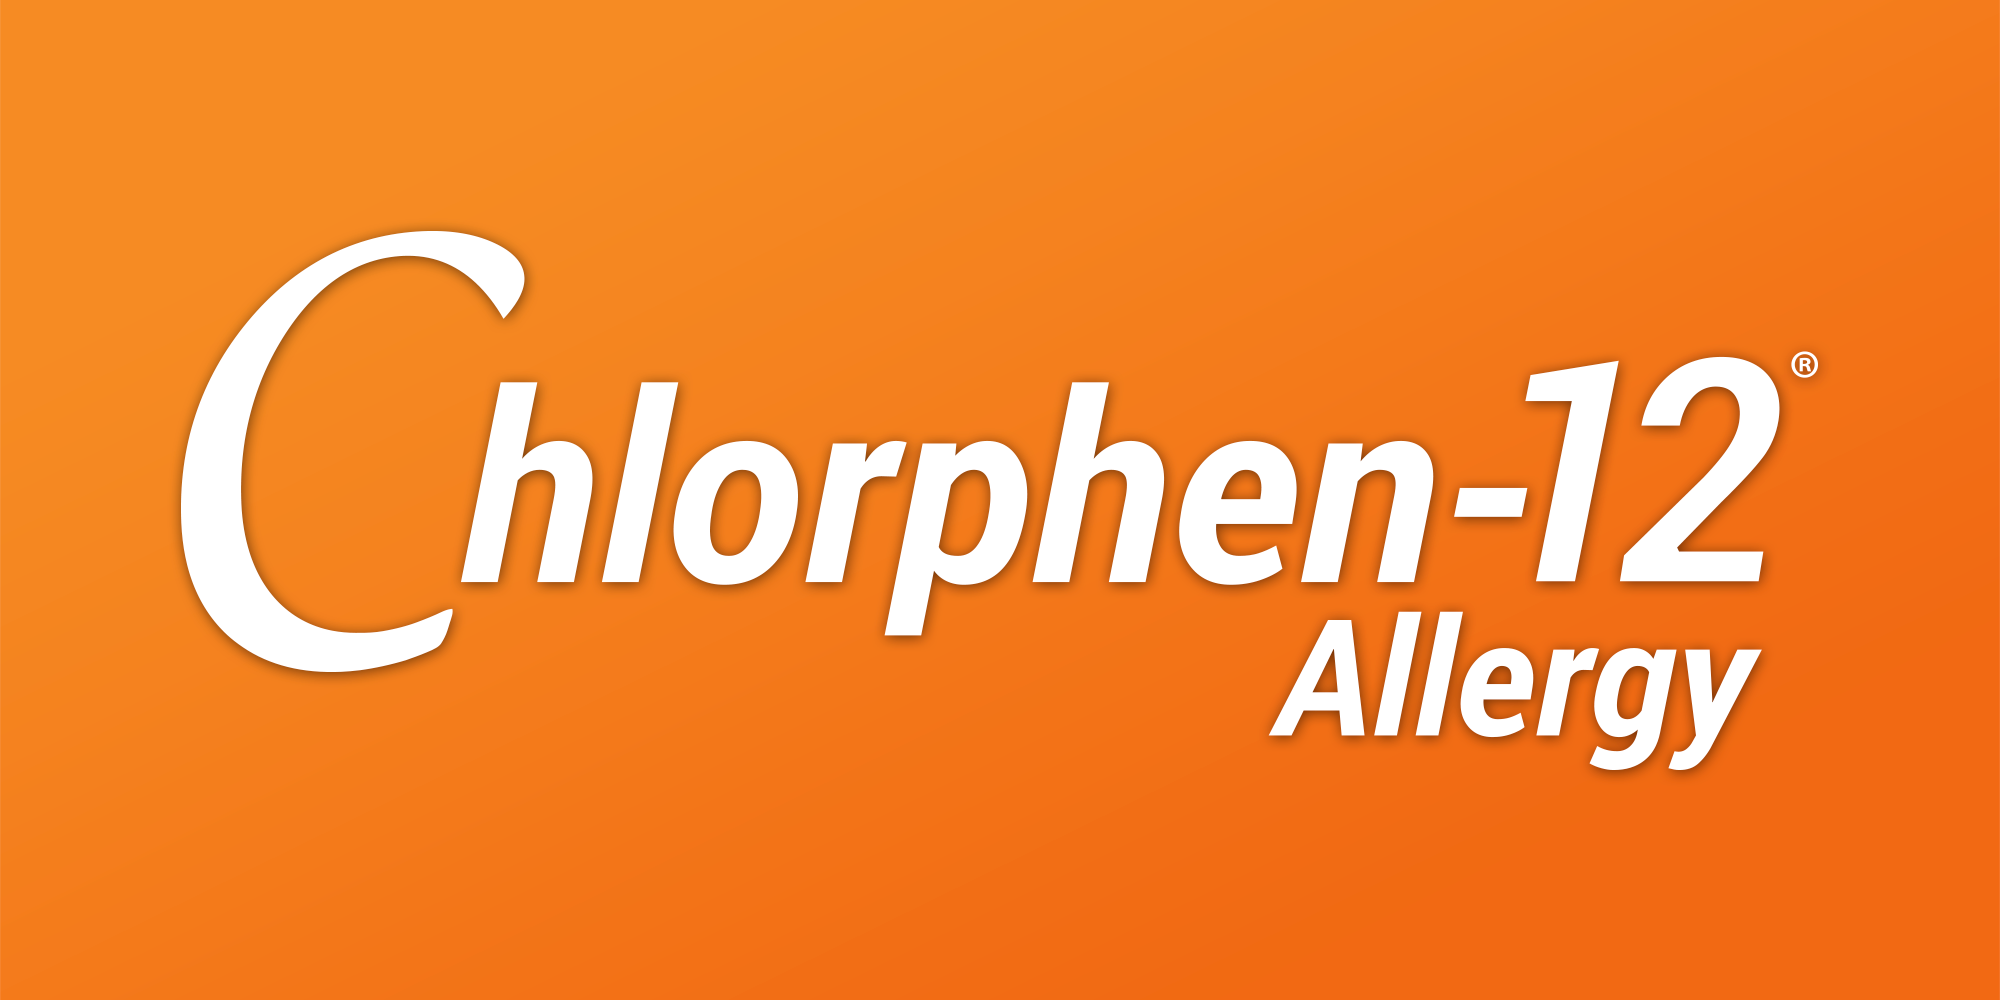 Chlorphen-12 Allergy